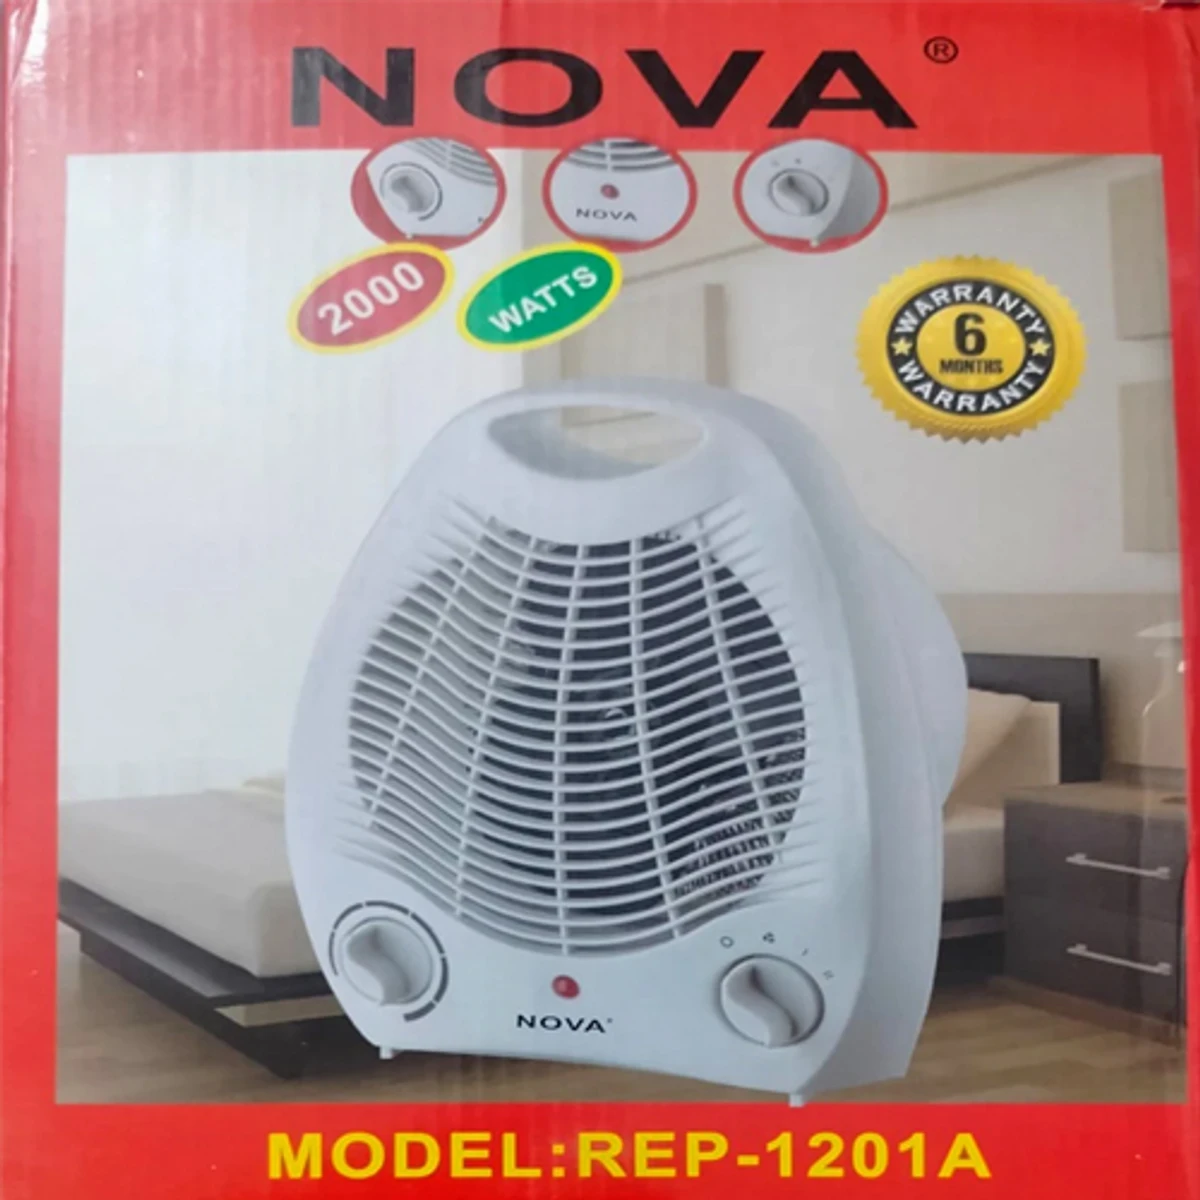 Nova -1201A 2000 Watts Electric Room Heater